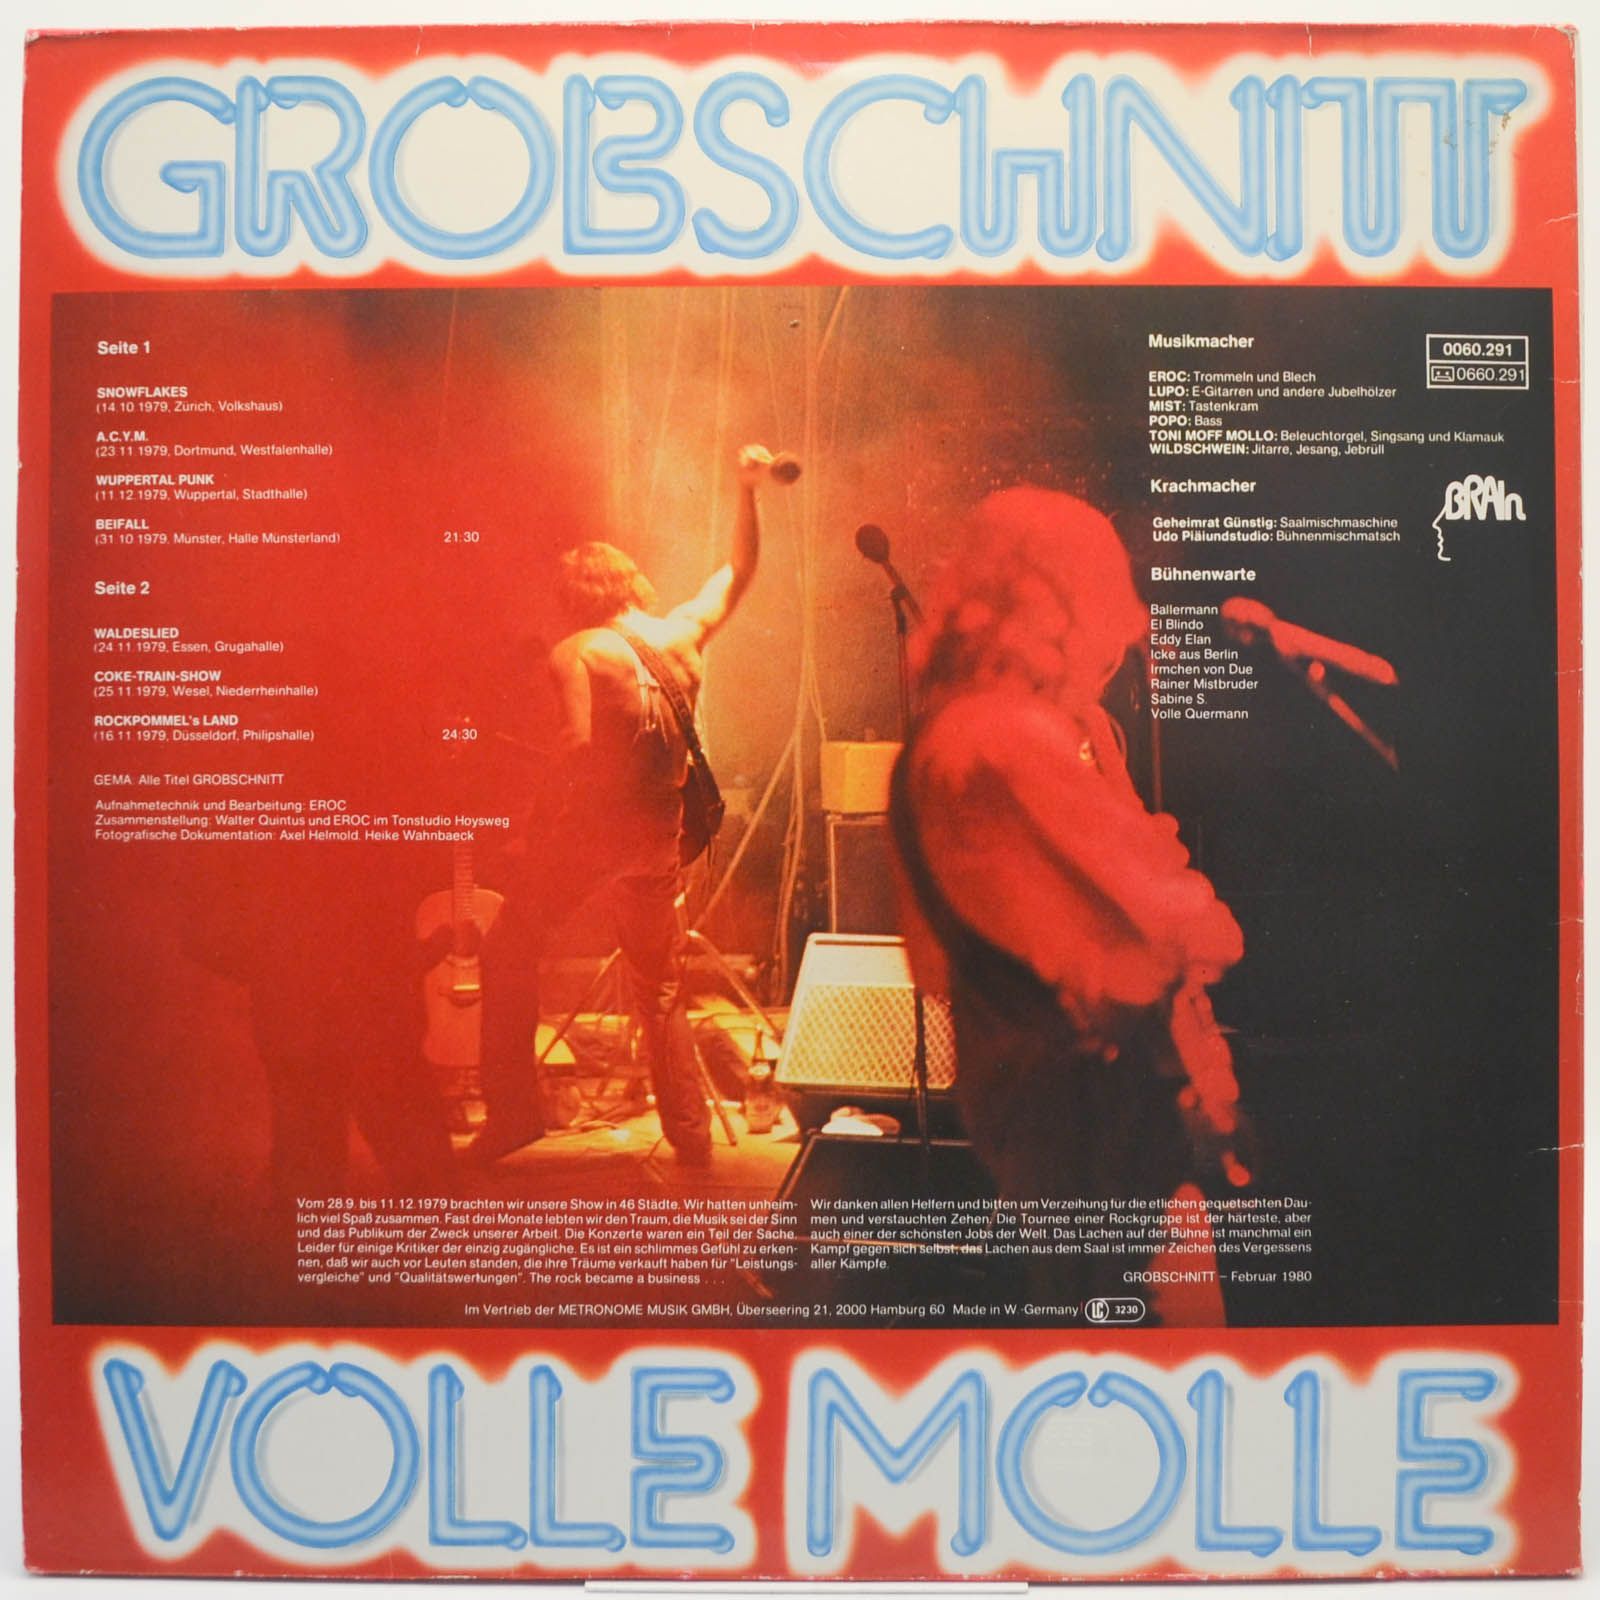 Grobschnitt — Volle Molle, 1980